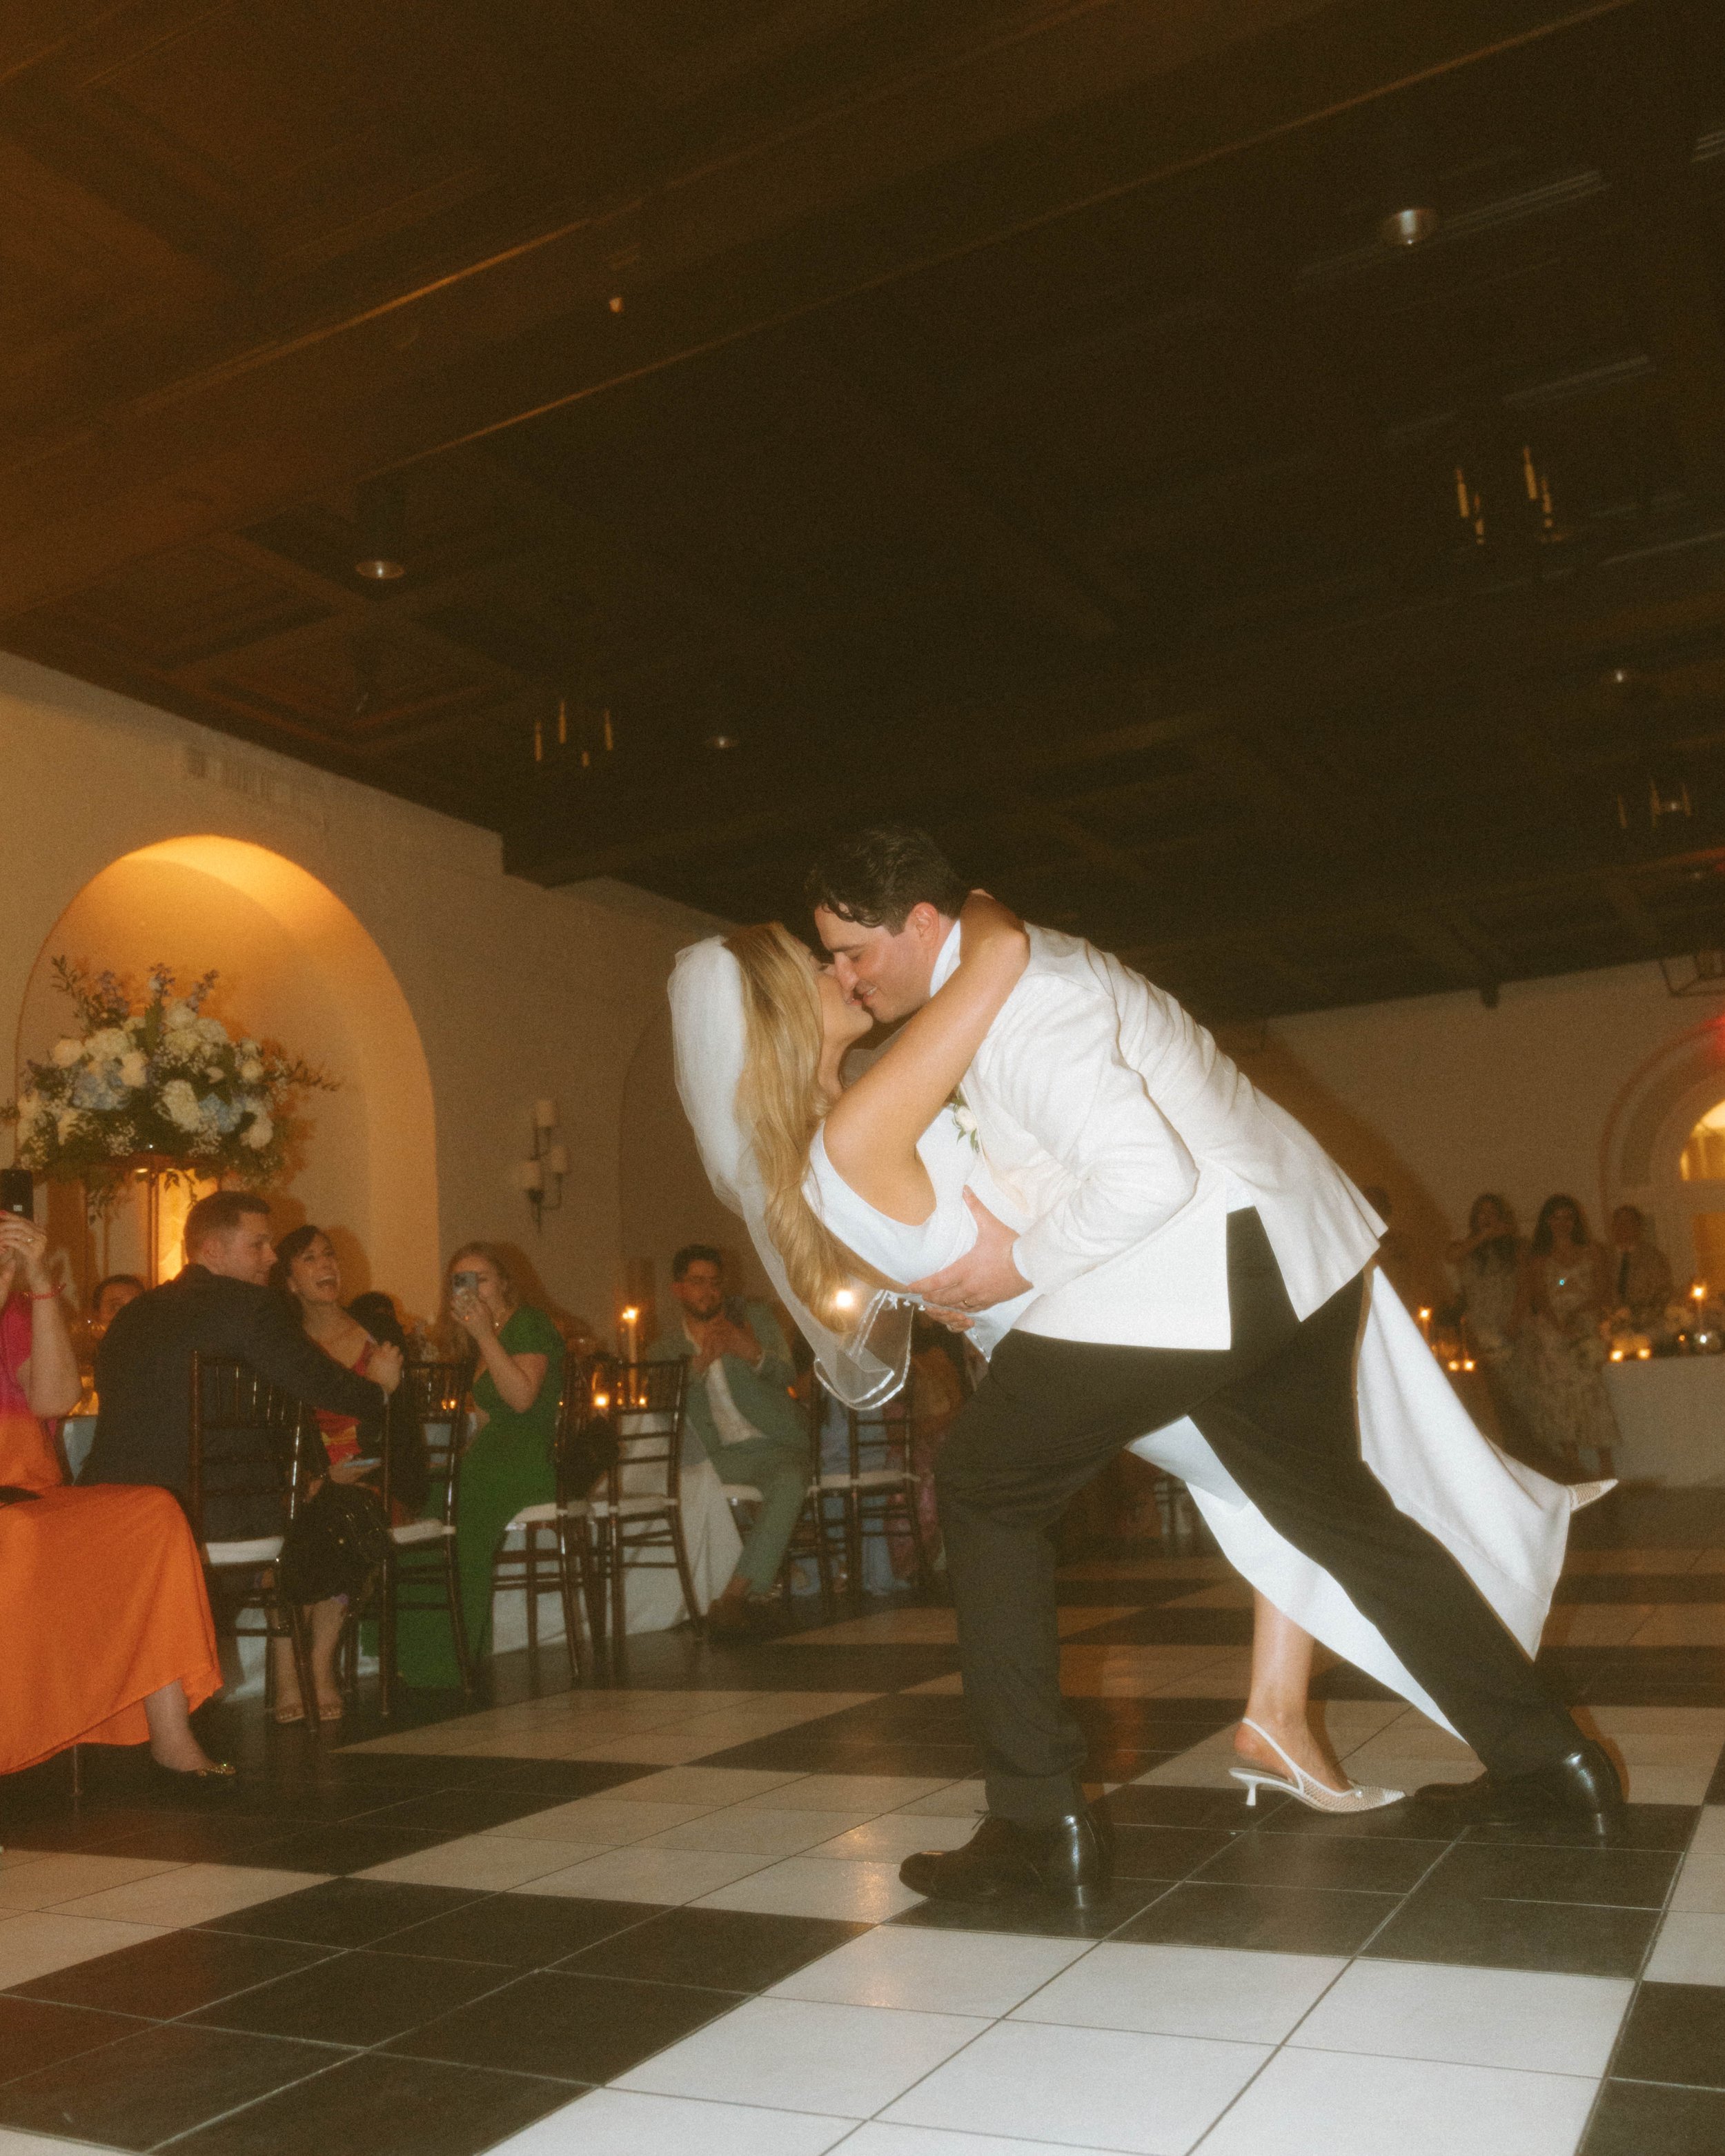 10 CASA MARINA RESORT - DANI PARADA PHOTOGRAPHY - LITTLE MISS PLANNER - KEY WEST WEDDING - FLORIDA KEYS WEDDING PLANNER - WEDDING RECEPTION -.jpg